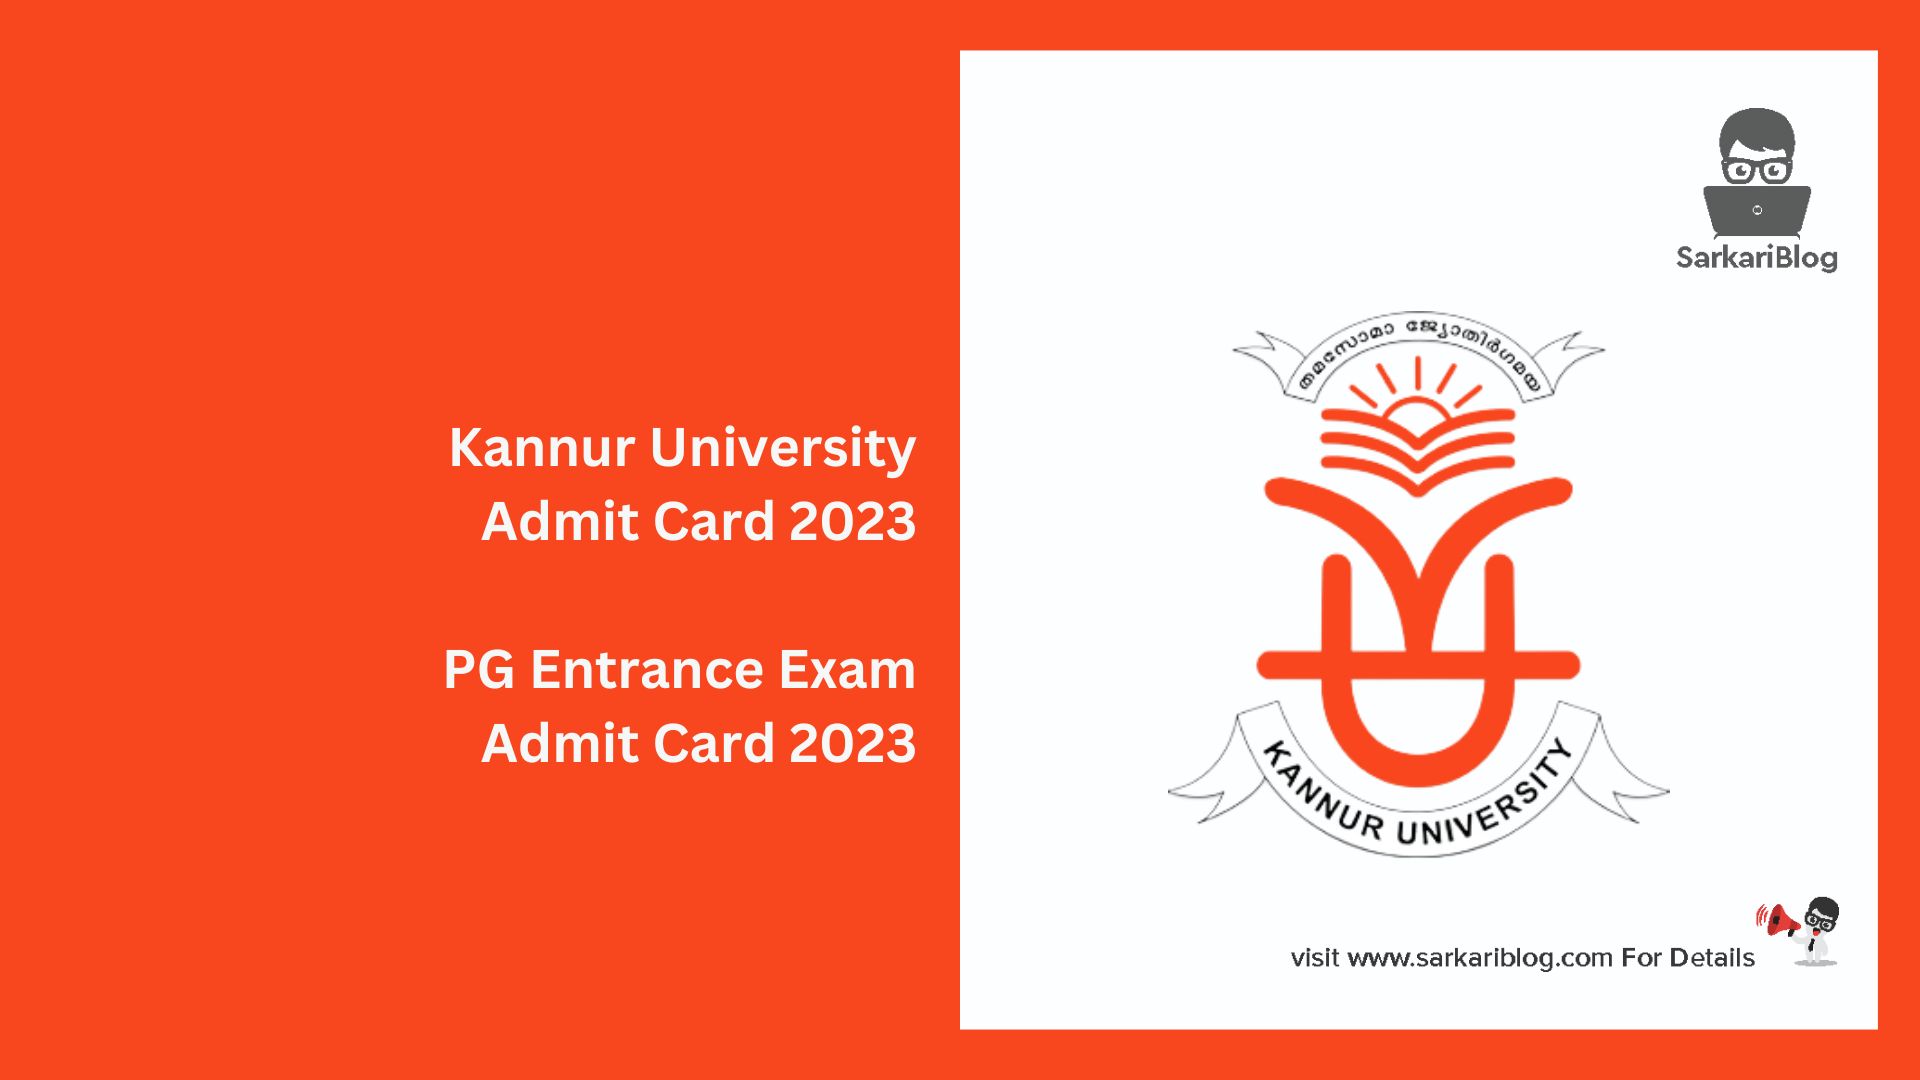 Kannur University Admit Card 2023